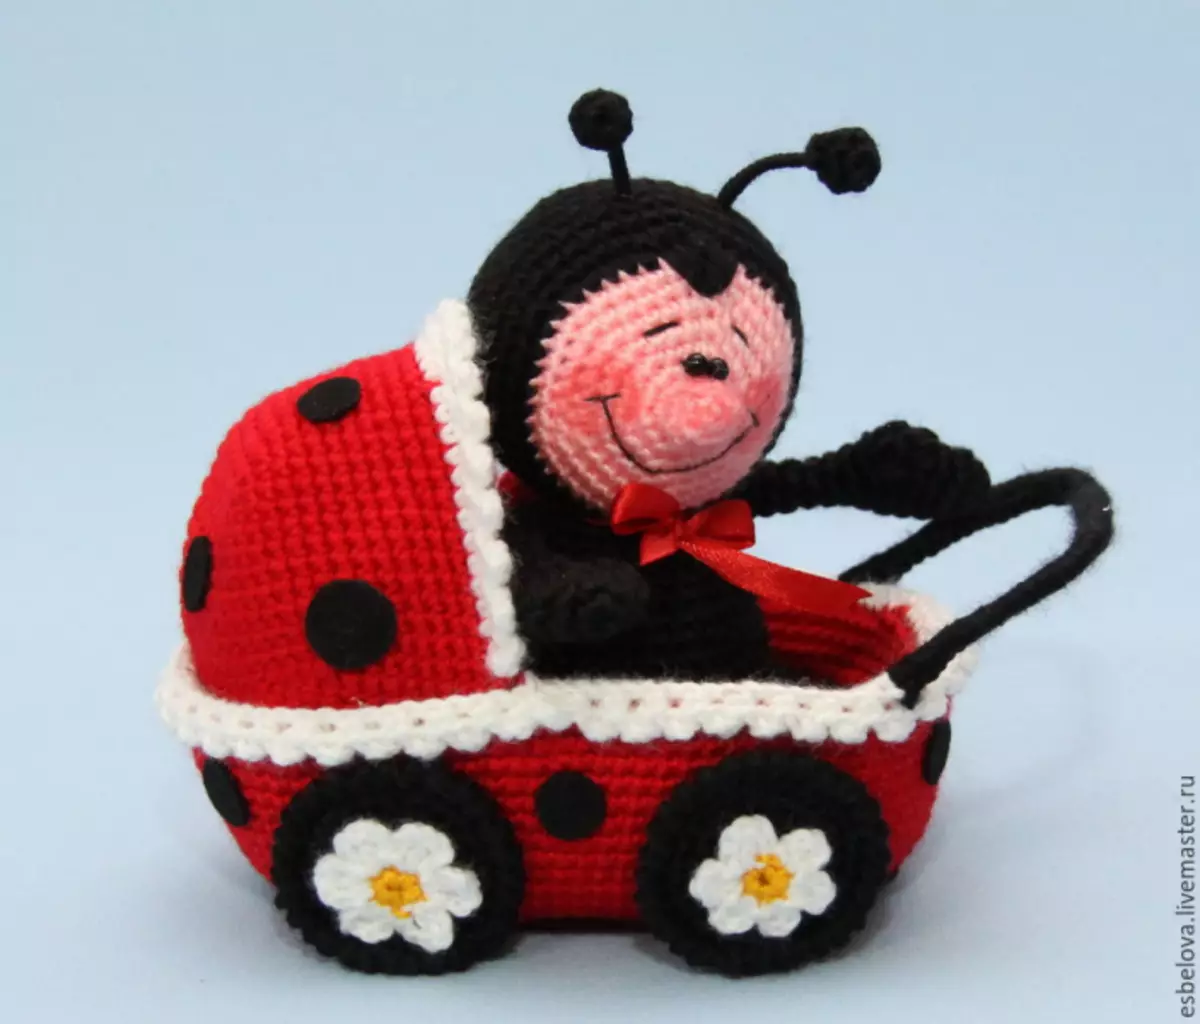 Ladybug crochet: schemes with process description and video